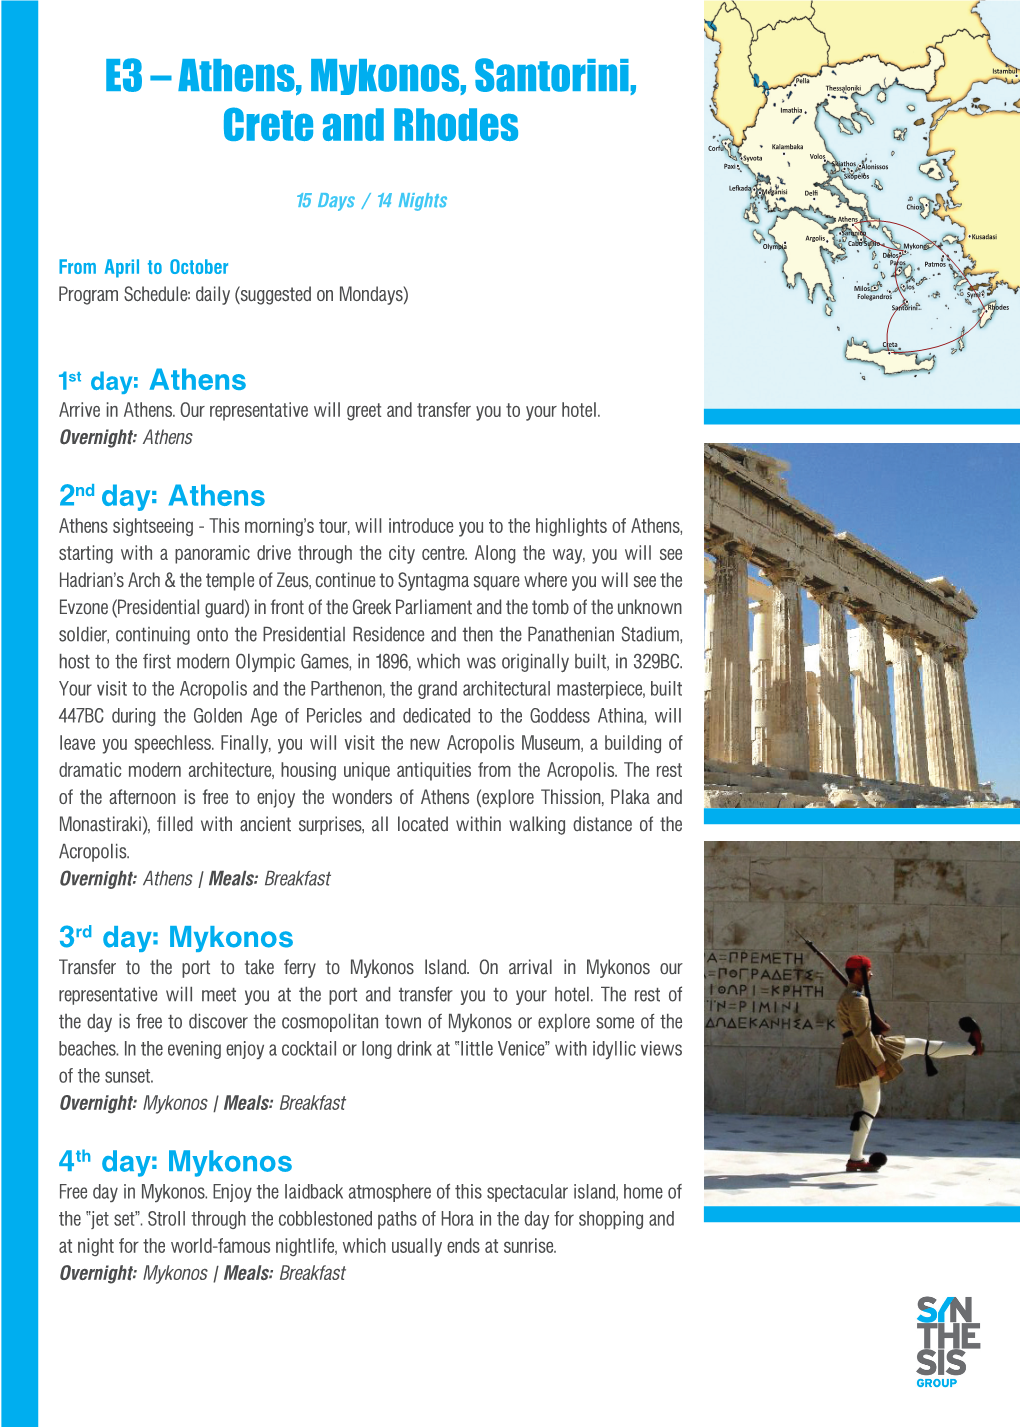 Athens, Mykonos, Santorini, Crete and Rhodes